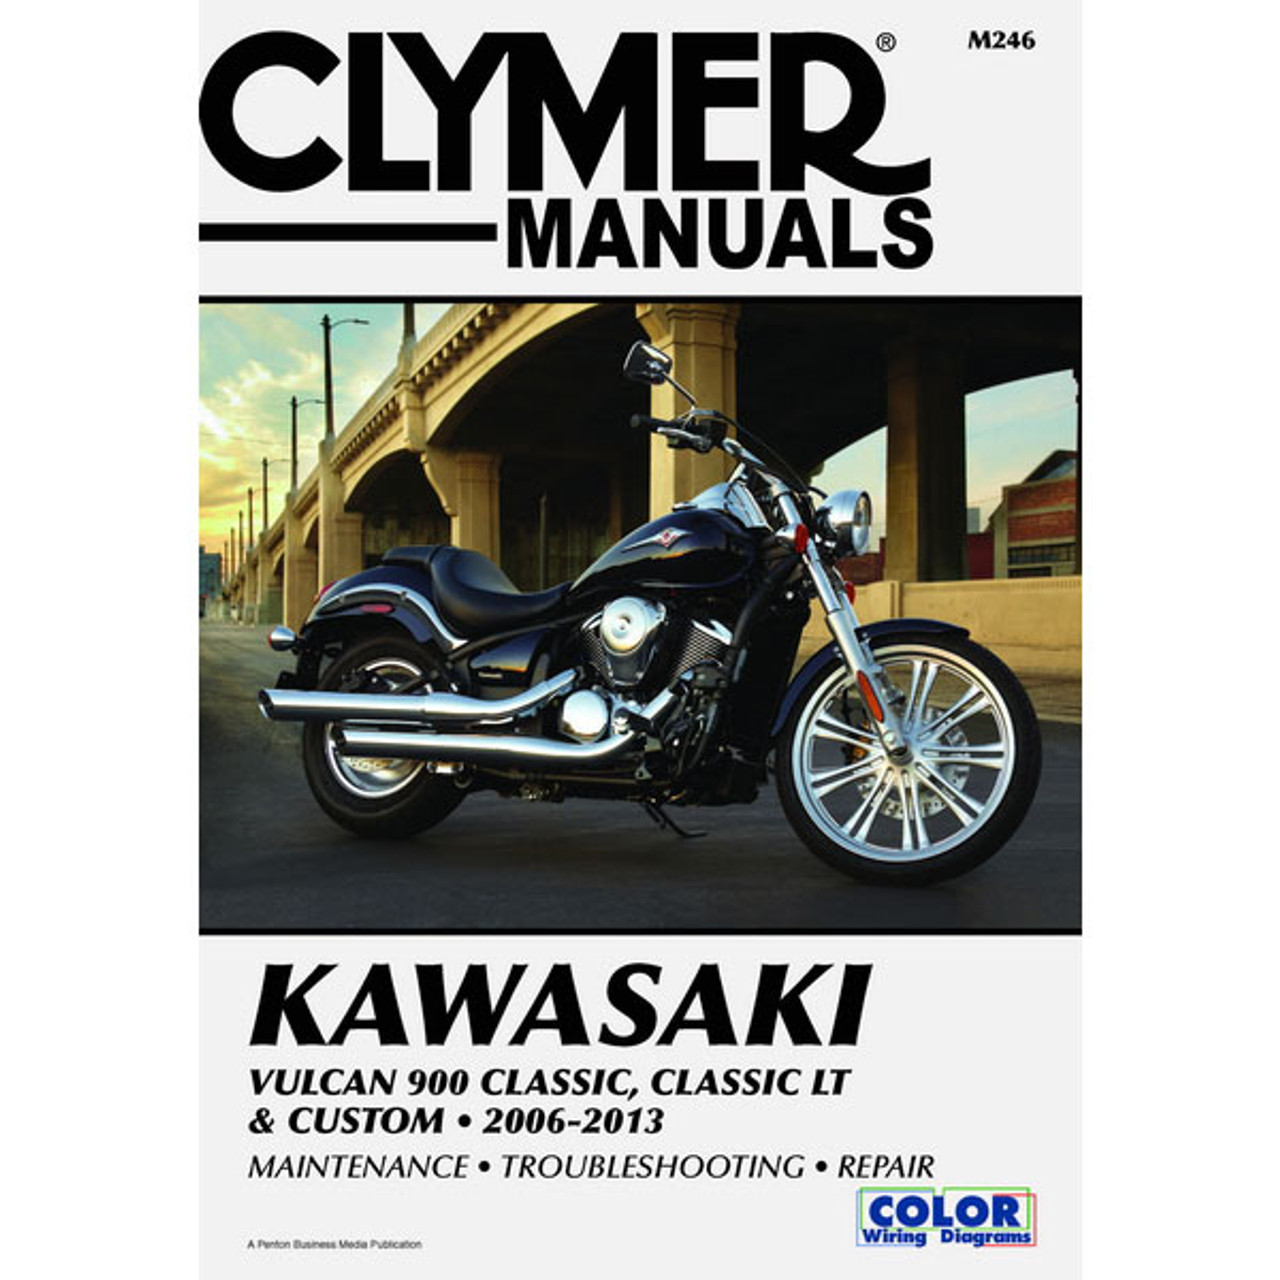 Smuk Balehval Egetræ Clymer Kawasaki Vulcan 900 Classic, Classic LT & Custom 06-13 Service Manual  - Sportbike Track Gear